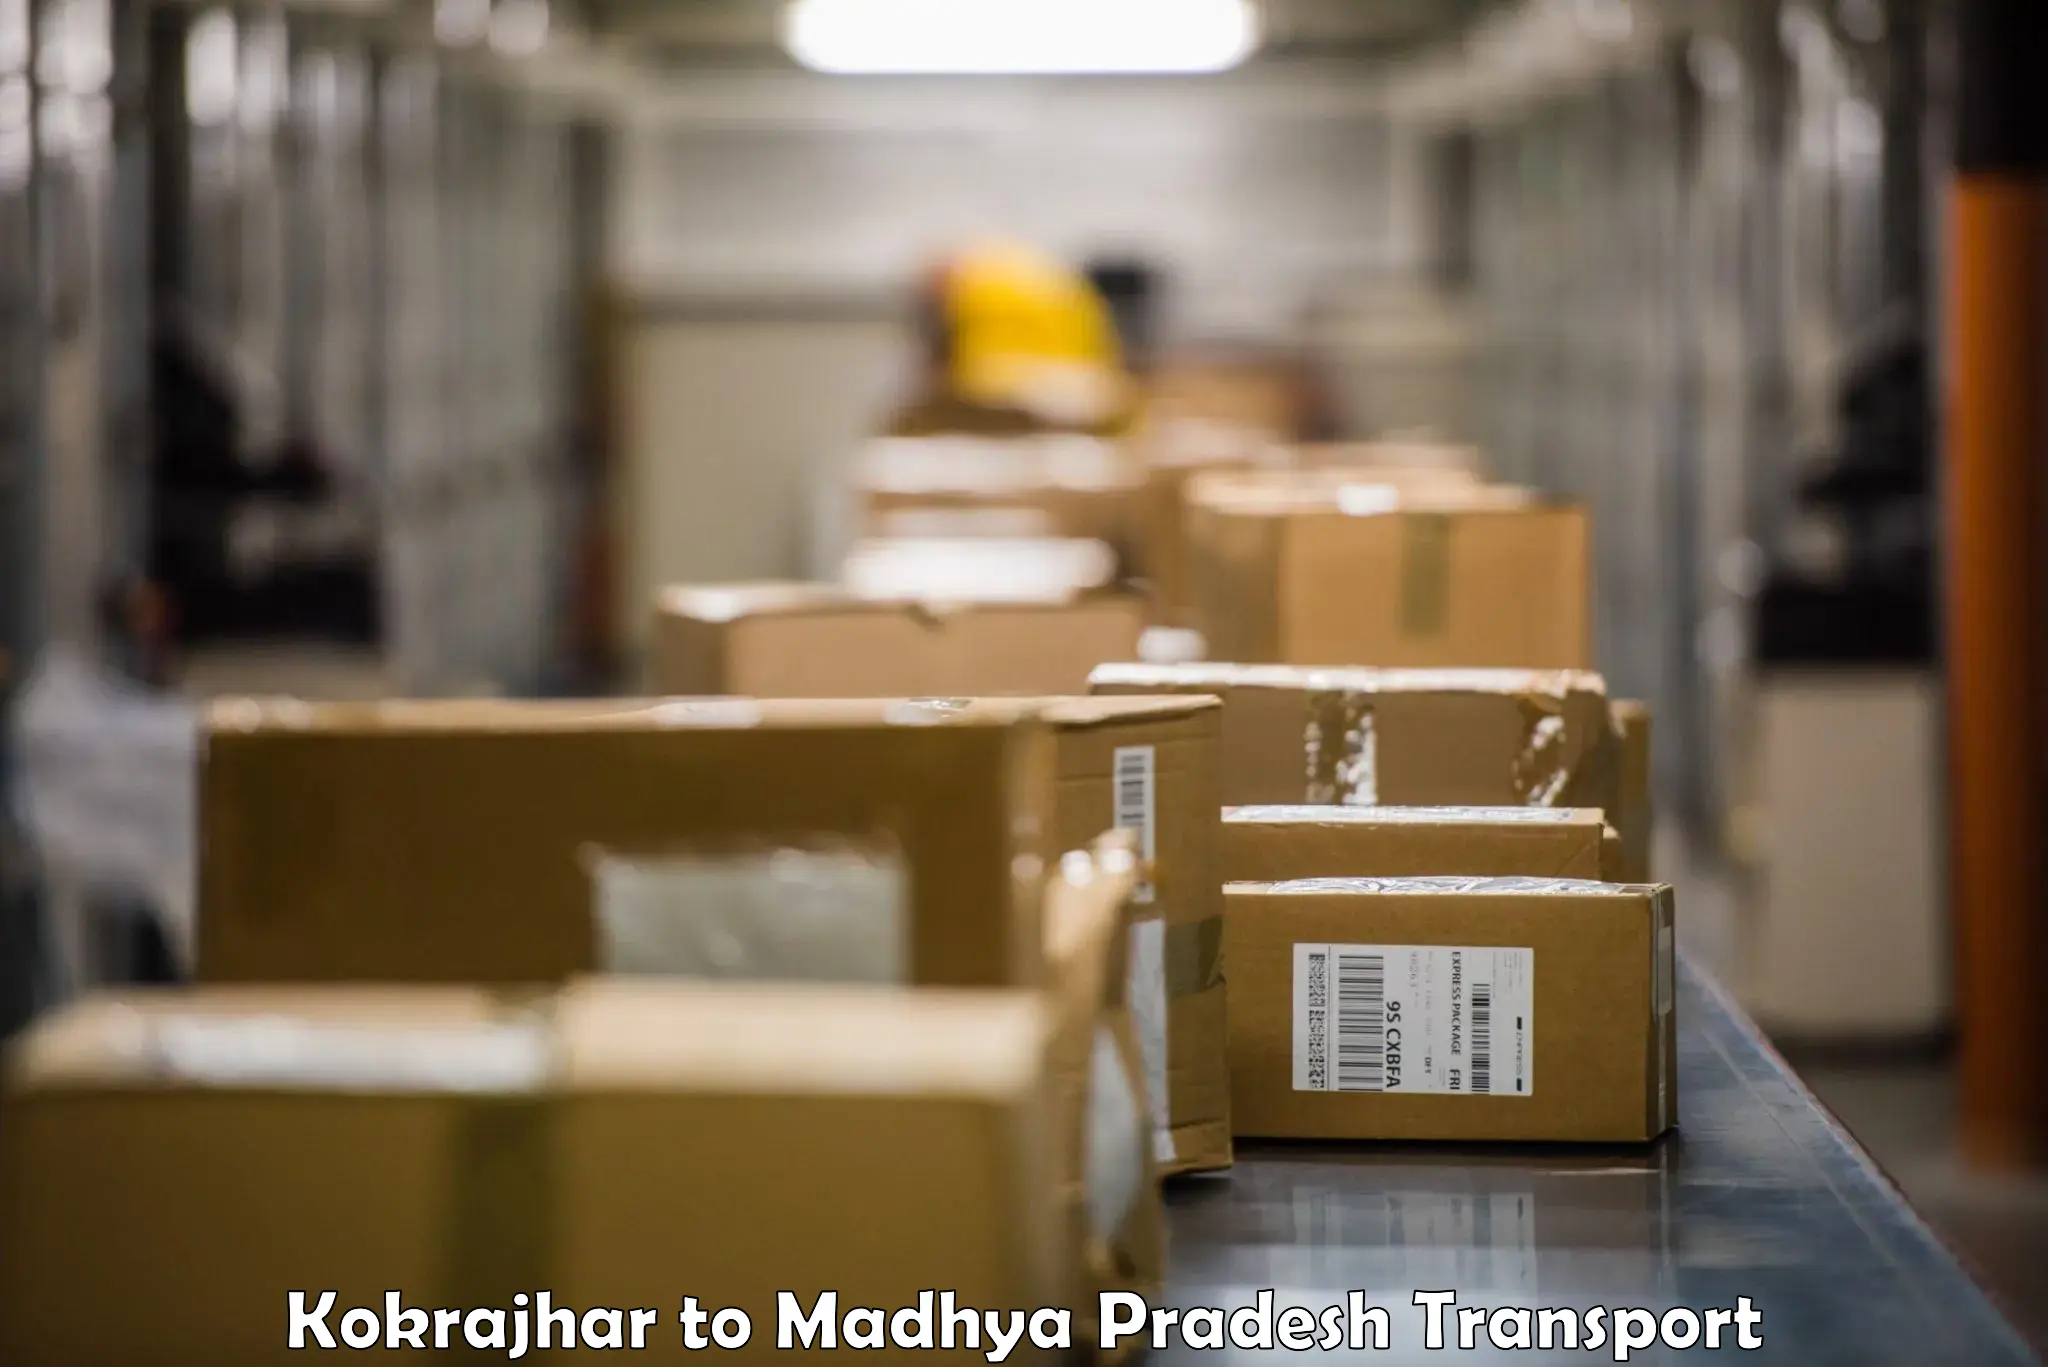 Lorry transport service Kokrajhar to Bhopal